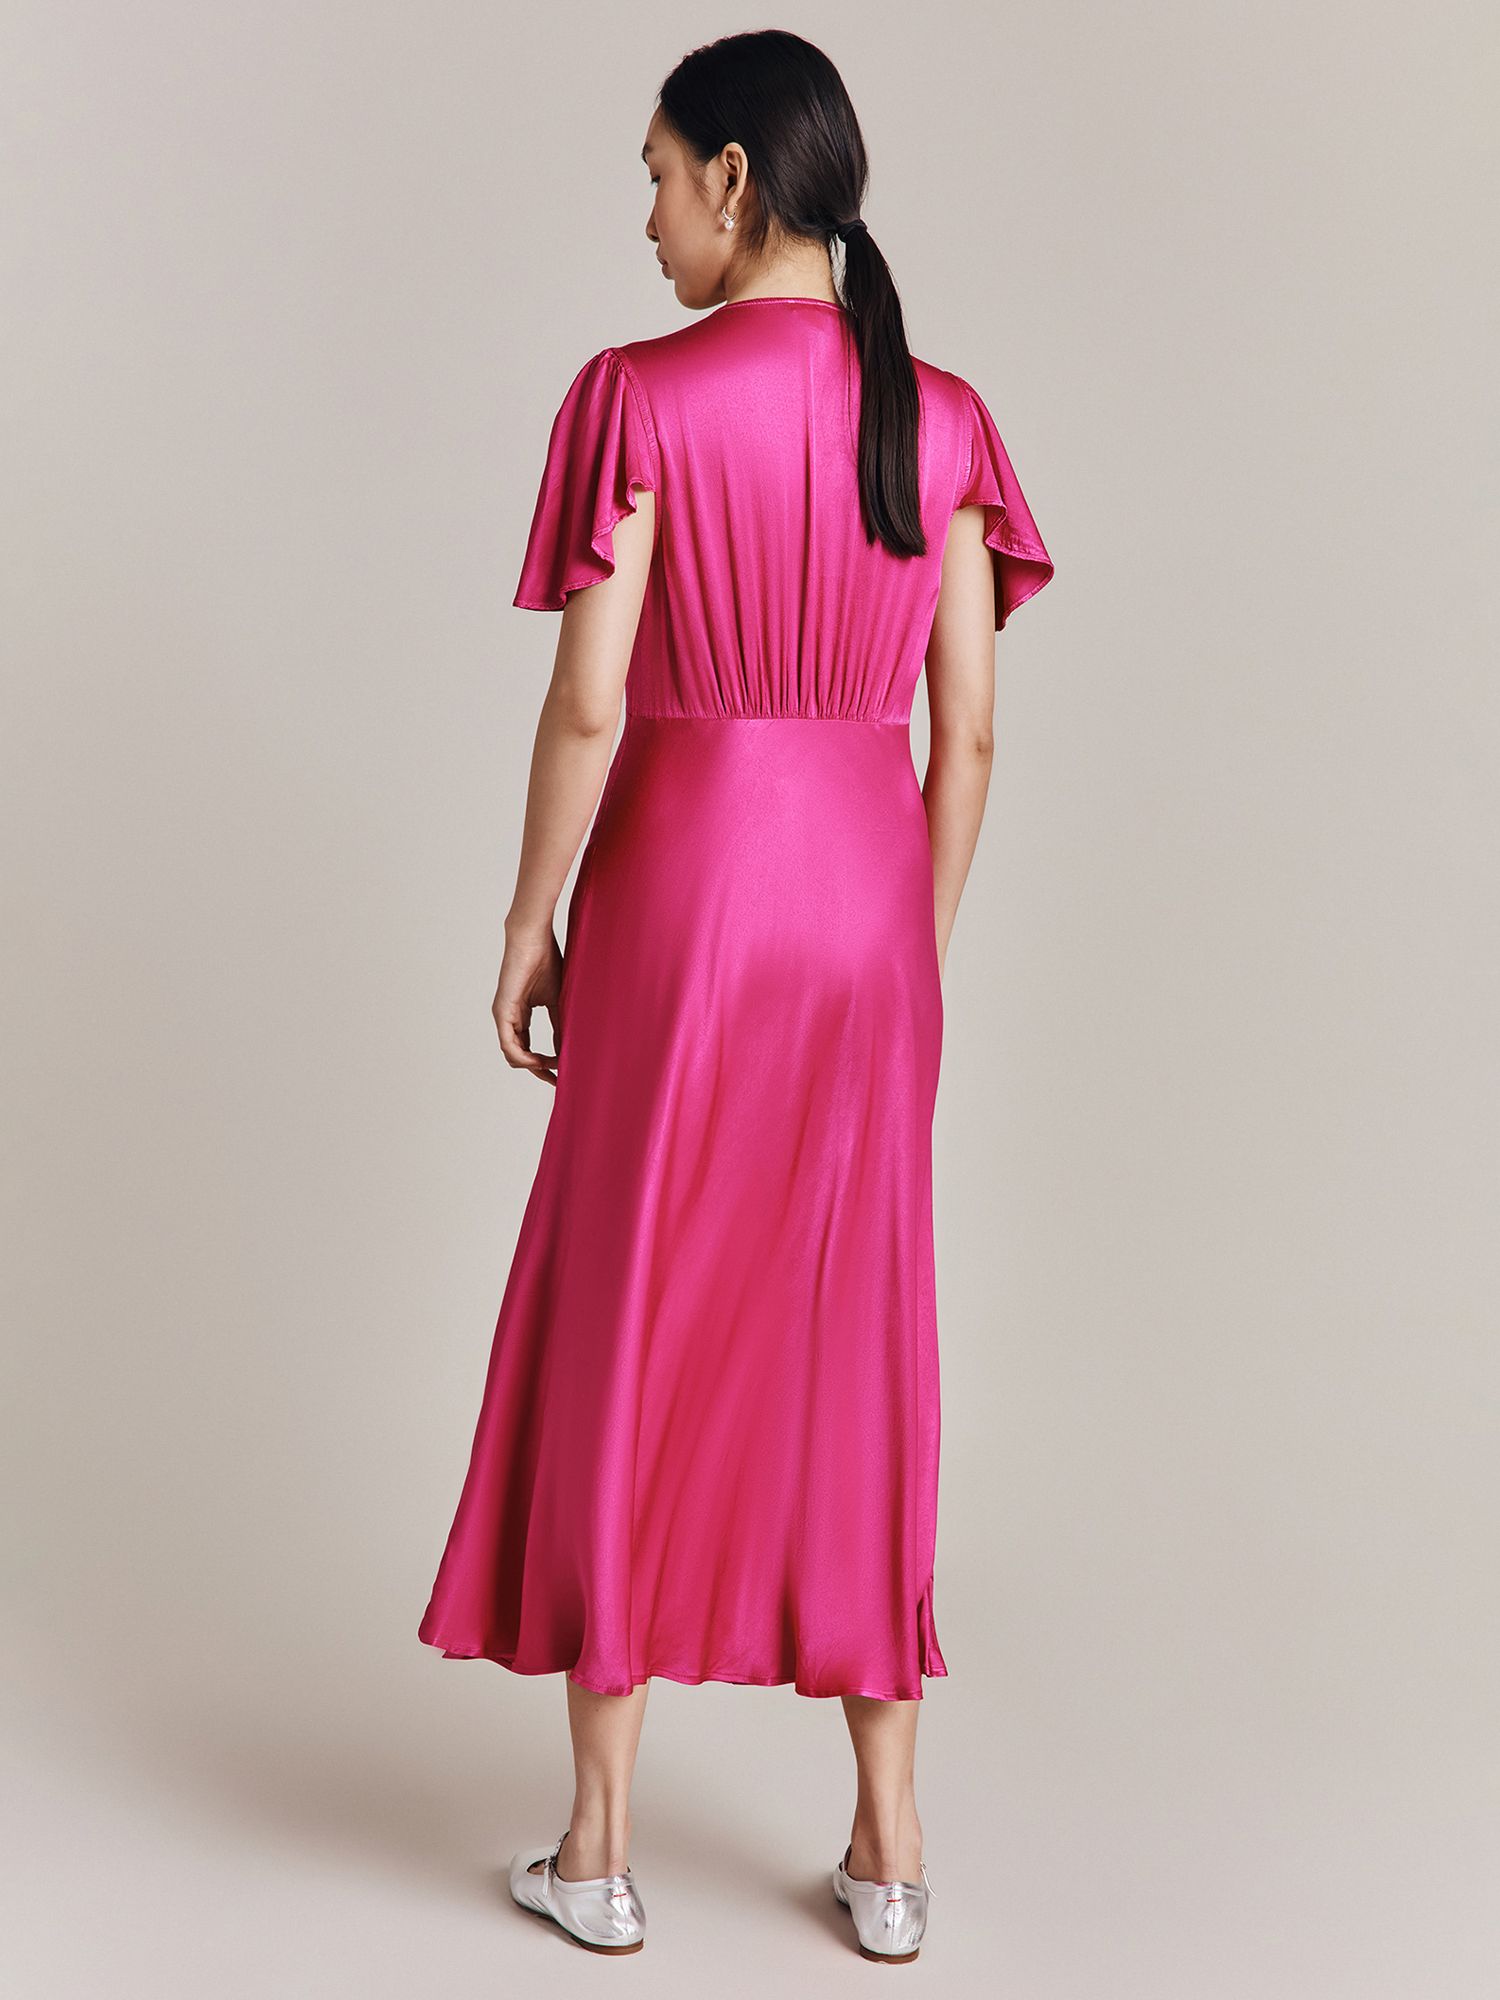 Ghost Grace Satin Swing Midi Dress, Bright Pink at John Lewis & Partners